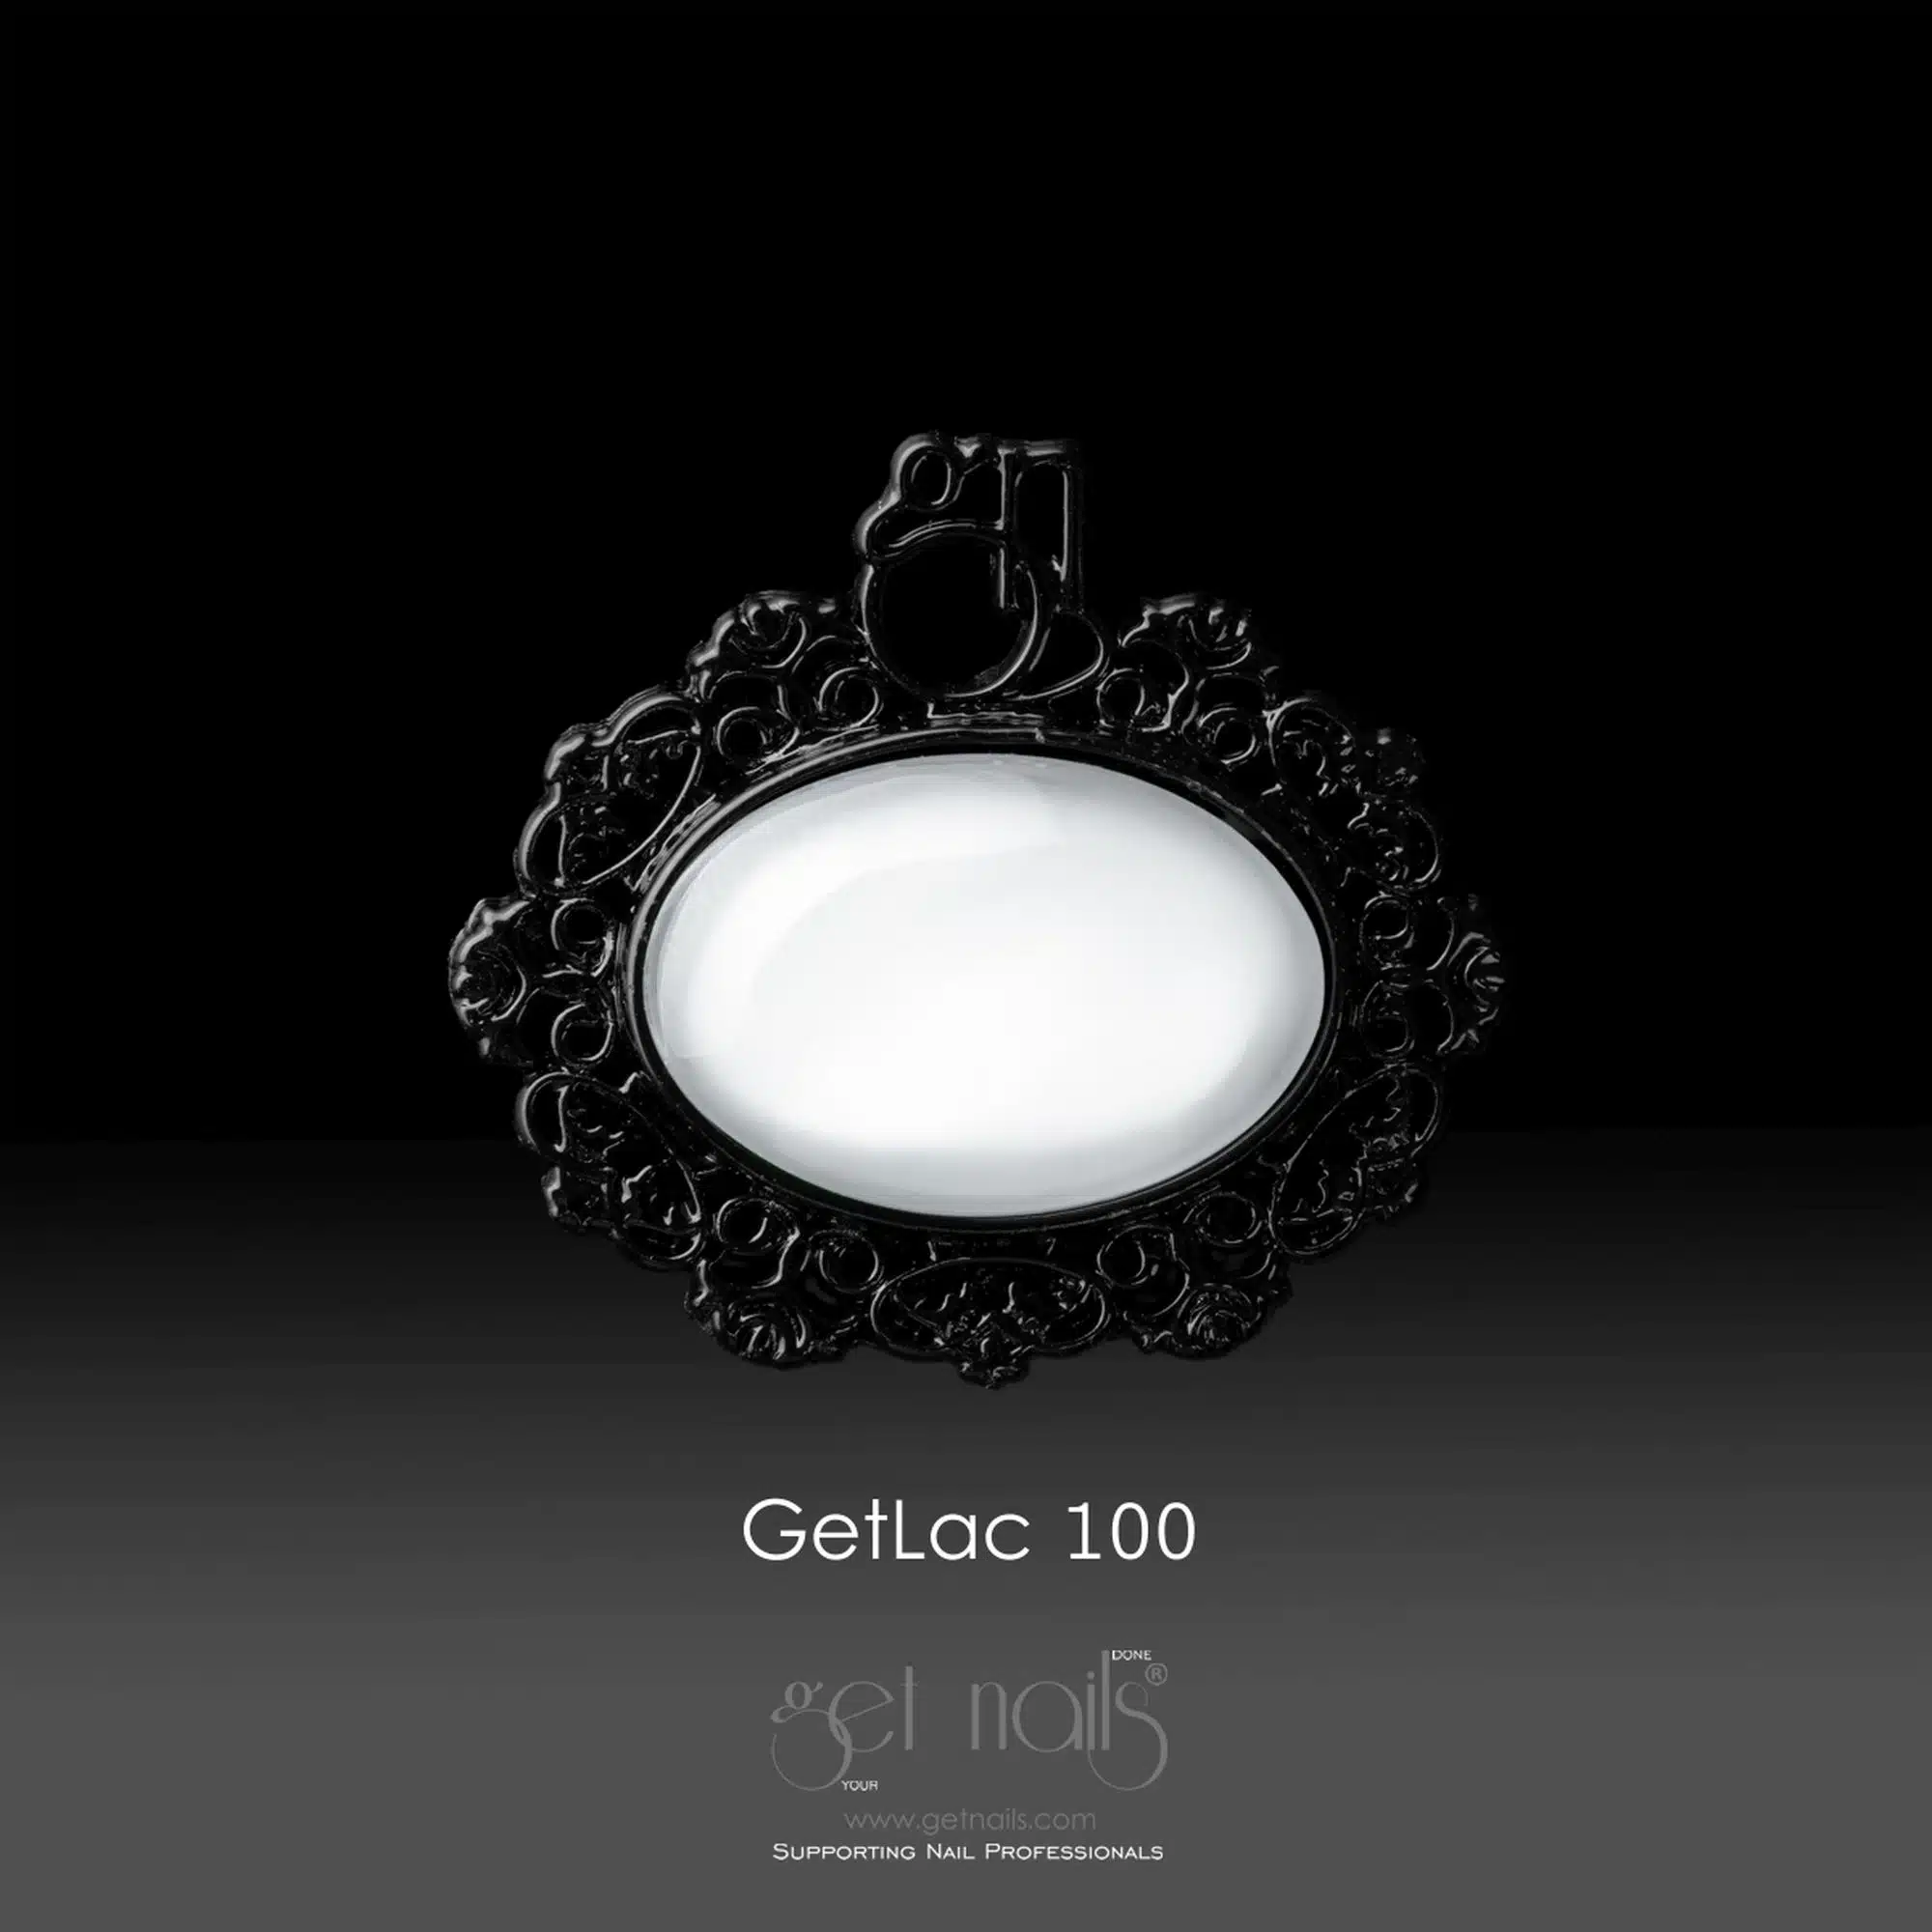 Get Nails Austria - GetLac 100 White 15g